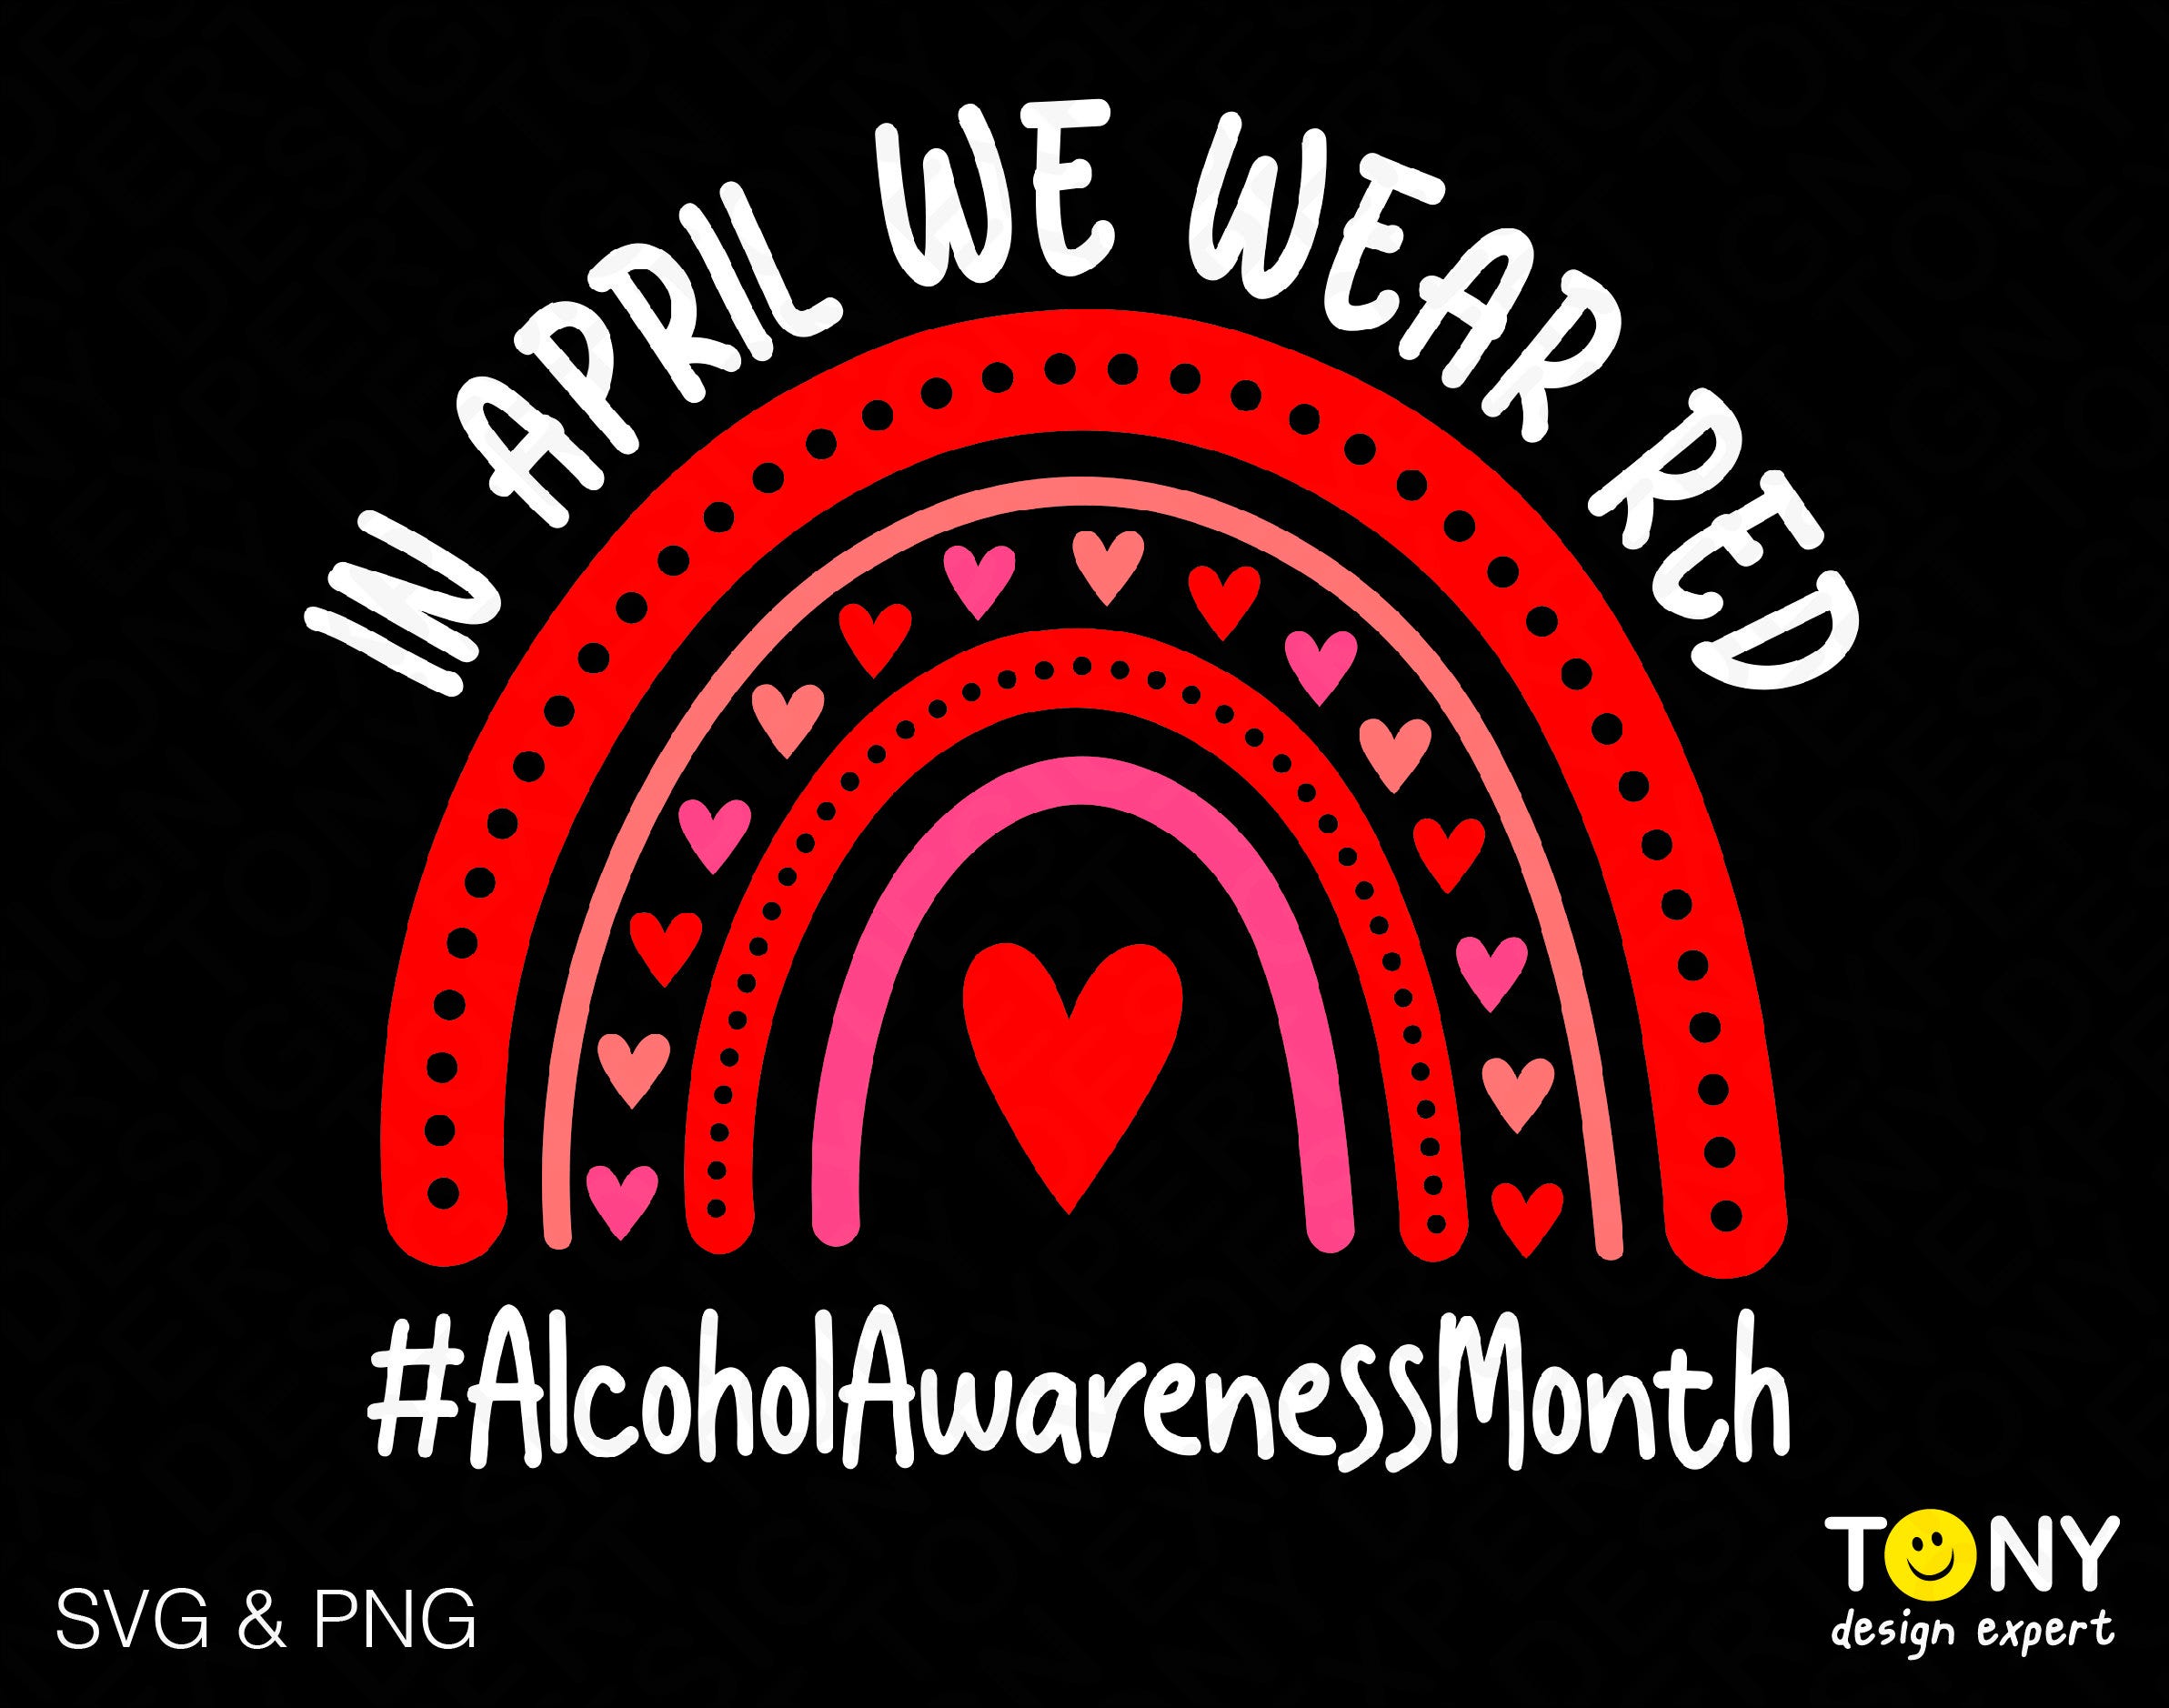 In April We Wear Red Svg Png, Alcohol Dependence Awareness, #AlcoholAwarenessMonth Red Rainbow Digital Download Sublimation PNG & SVG Cricut